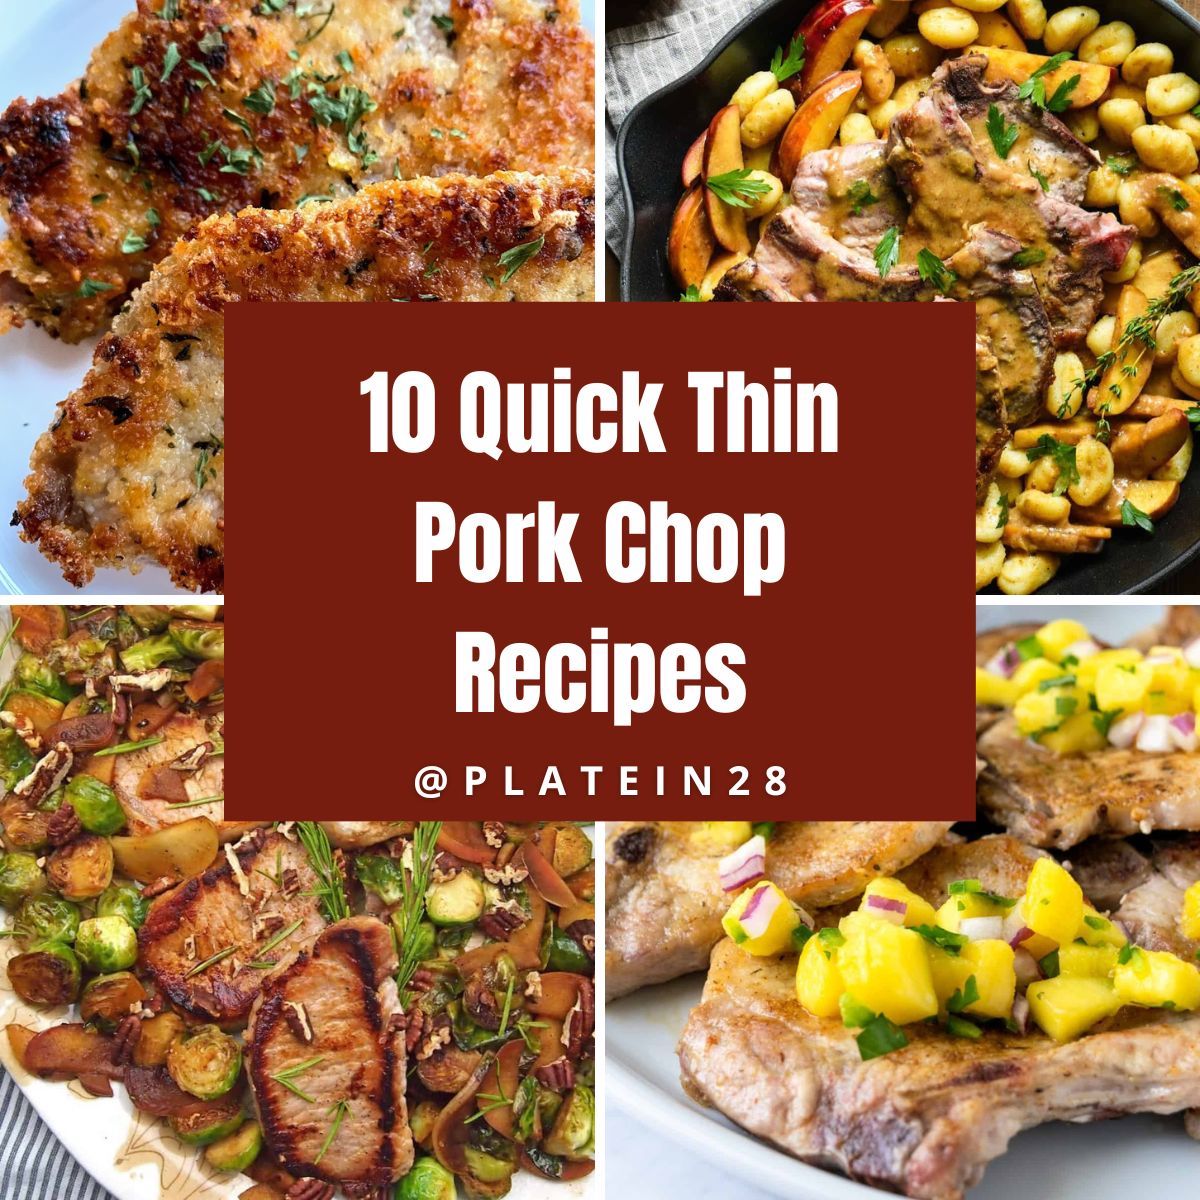 🐖 10 Quick Thin Pork Chop Recipes